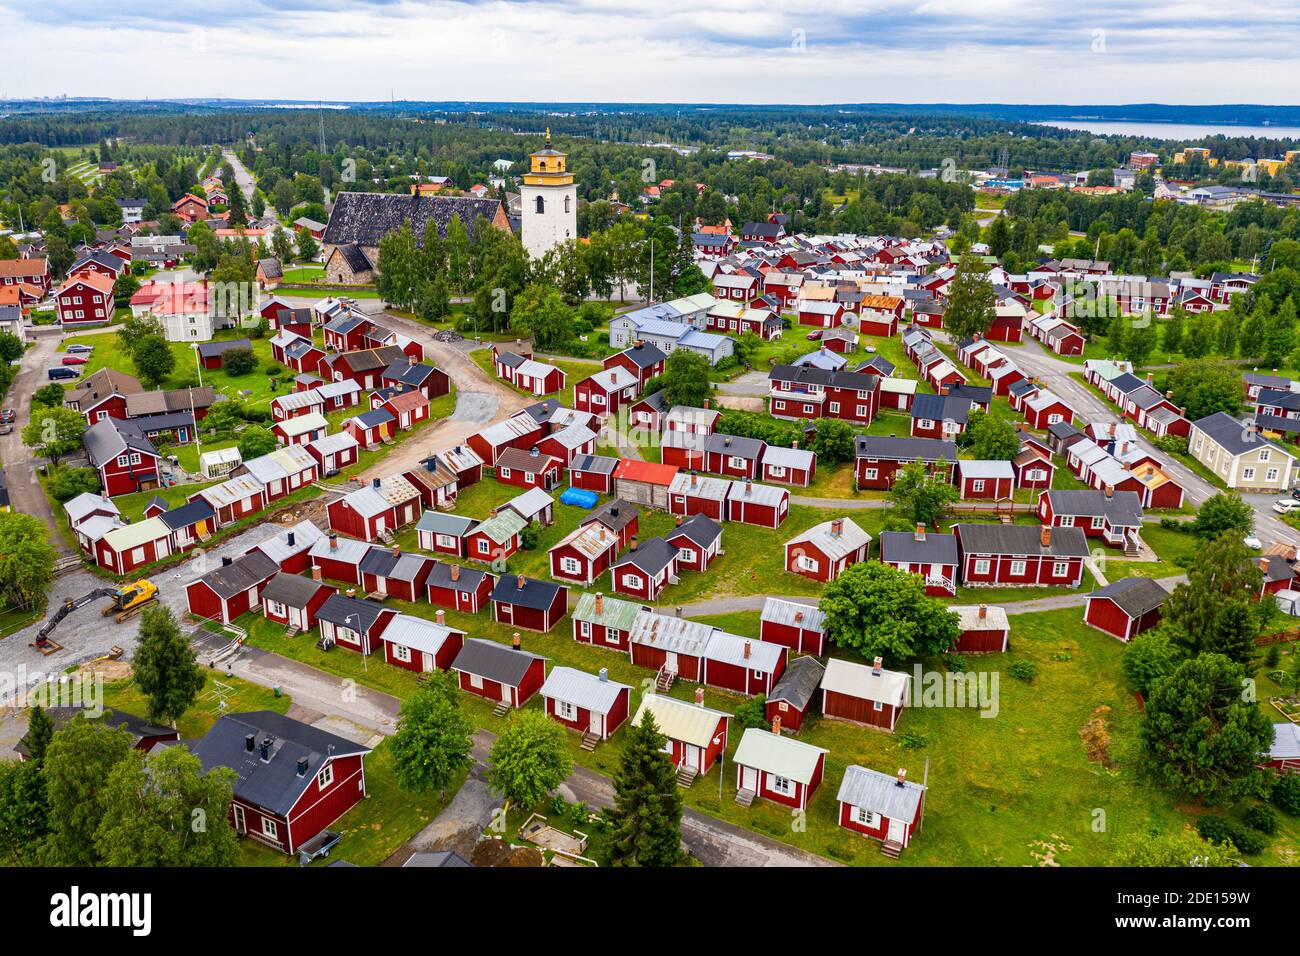 Aereo di Gammelstaden, Patrimonio dell'Umanità dell'UNESCO, Città della Chiesa di Gammelstad, Lulea, Svezia, Scandinavia, Europa Foto Stock